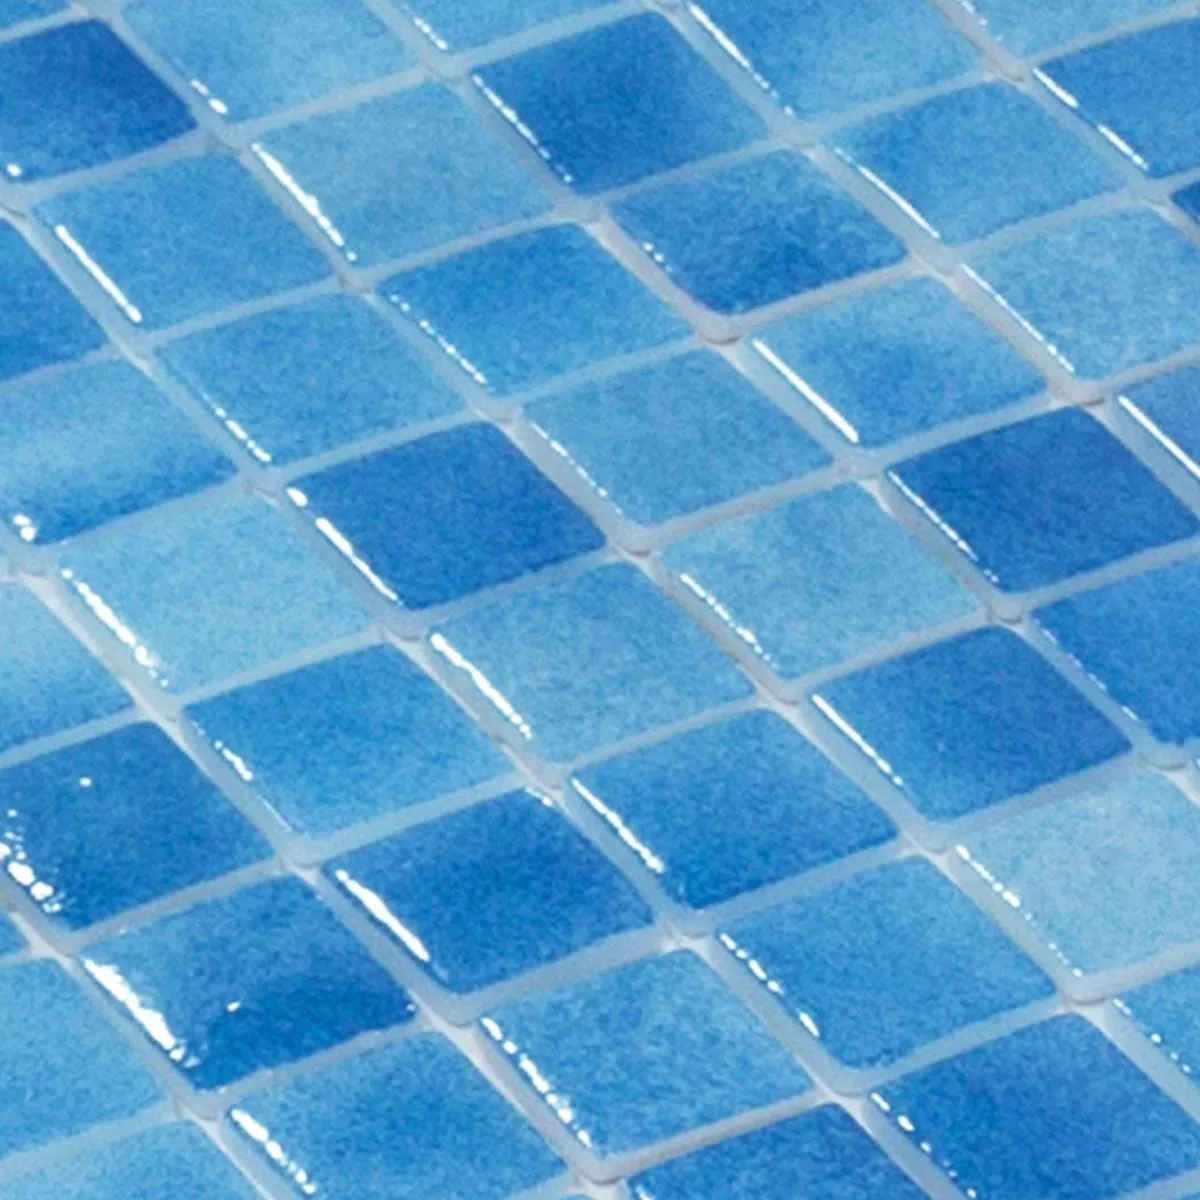 Cristal Piscina Mosaico Lagoona Mar Azul